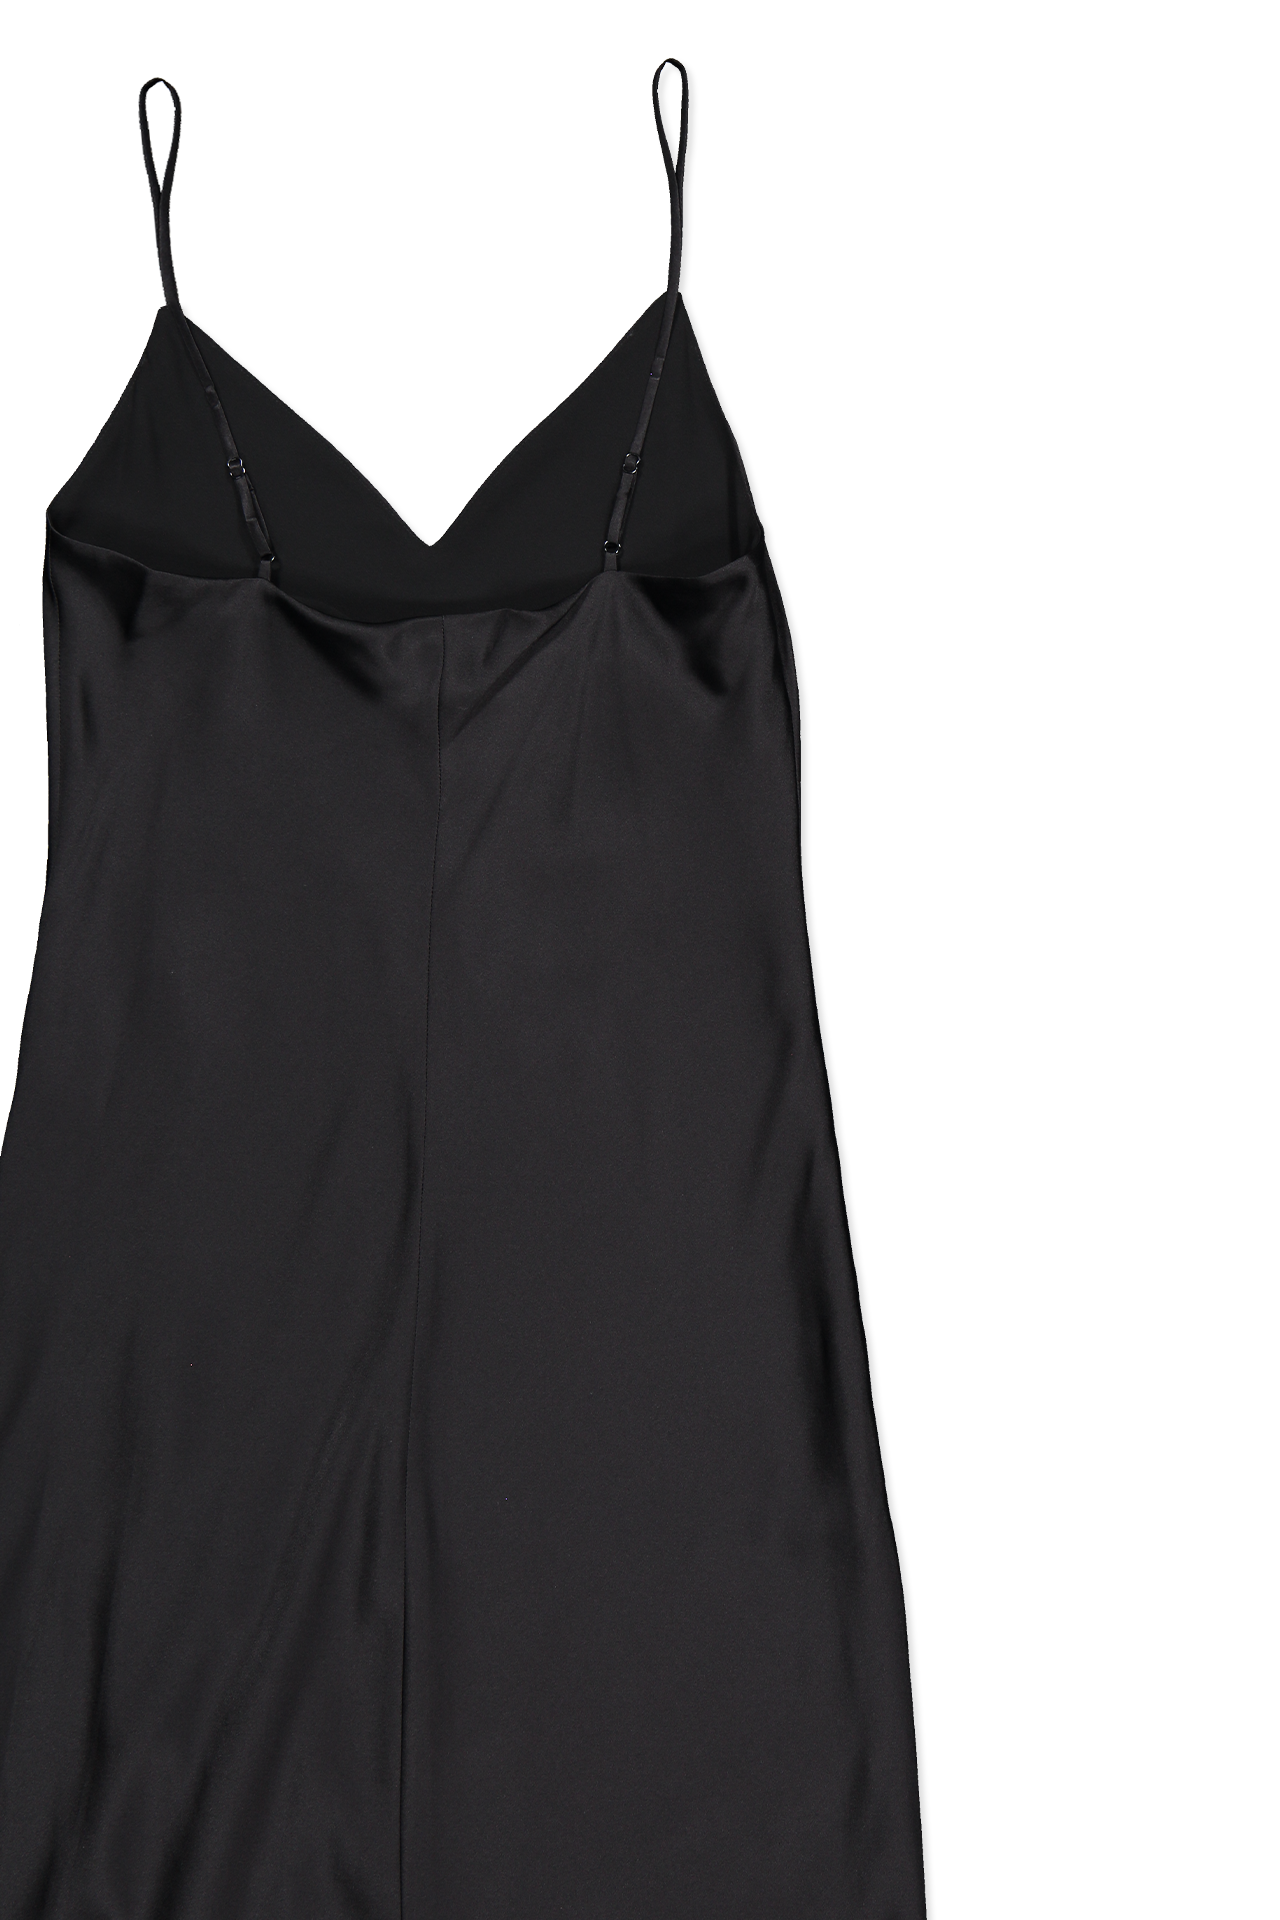 Lagence Jodie V-Neck Slip Dress Black Back Flat Image (3925354709107)